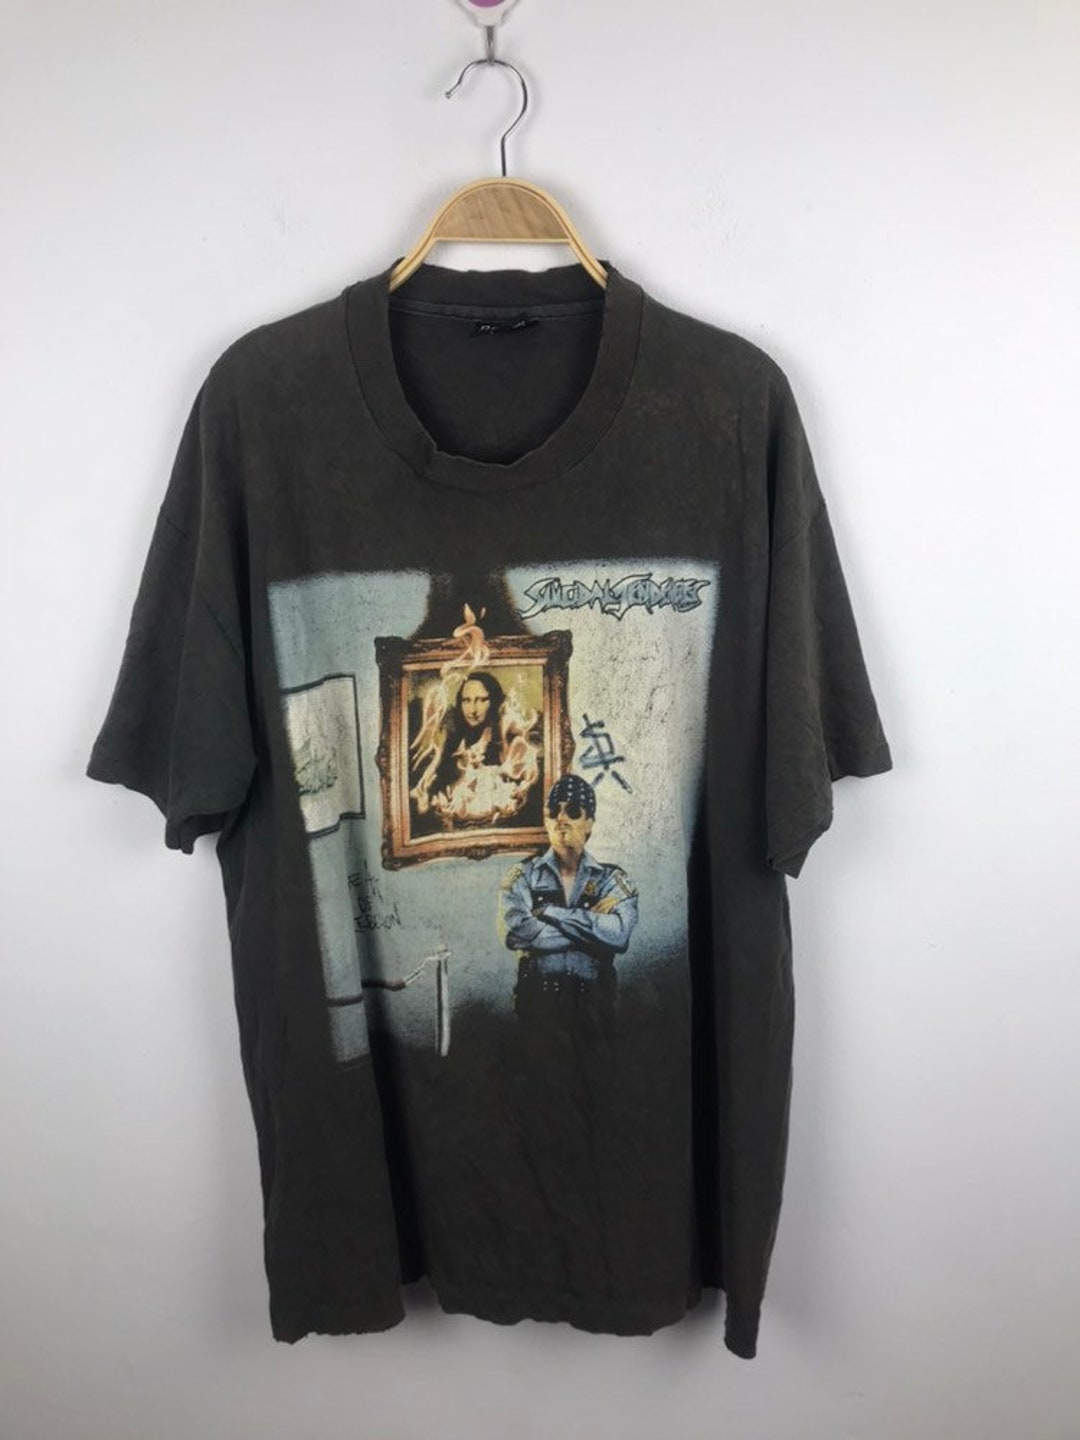 ★SUICIDAL TENDENCIES 93アメリカツアー Tシャツ FOG